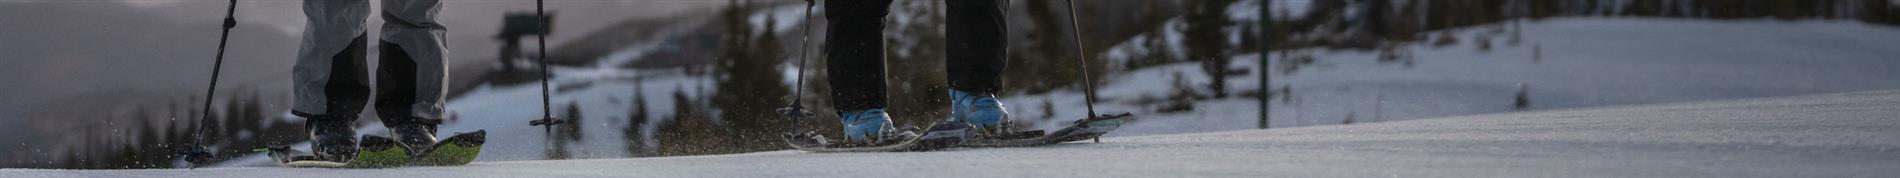 Alpina Men's Cross Country Skiing Equipment 